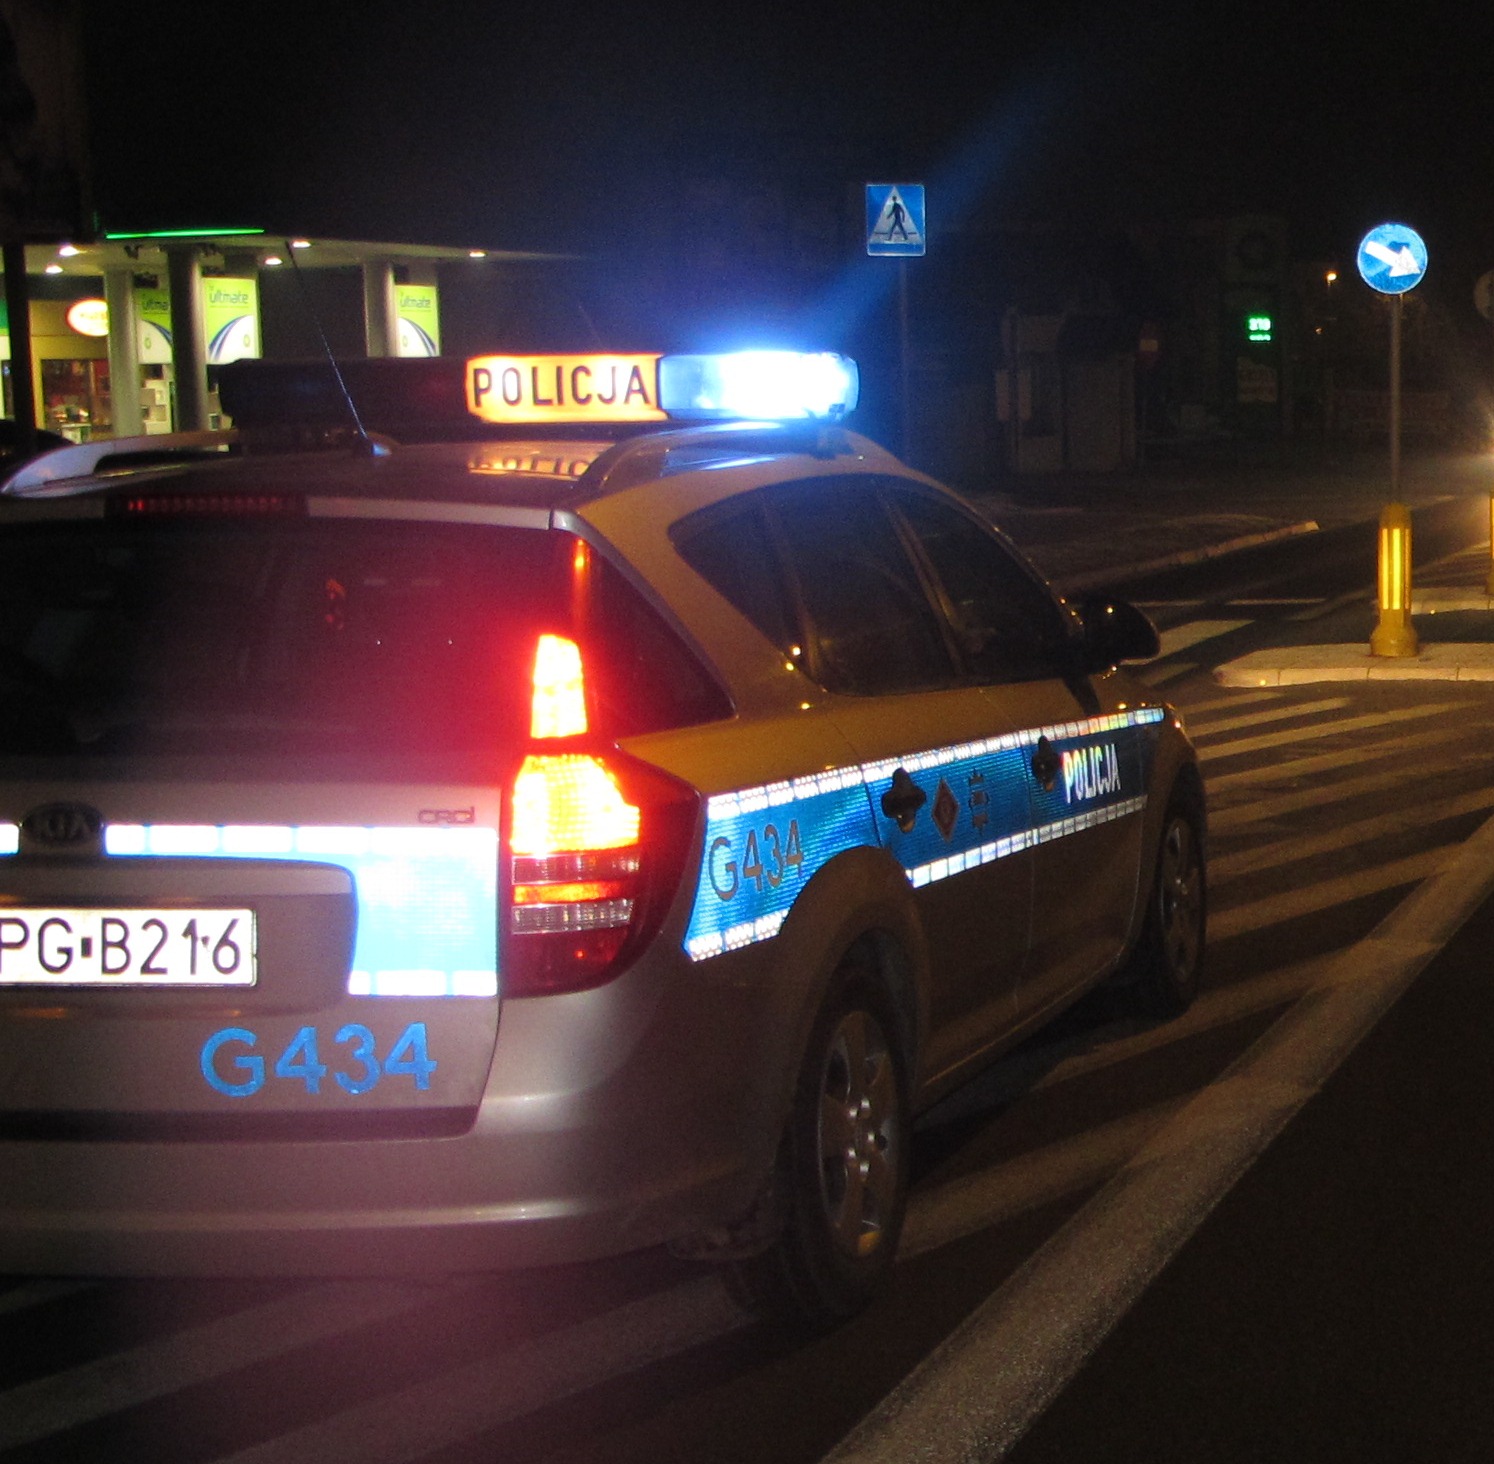 KPP Oświęcim radiowóz jadący ulica na sygnałach w nocy